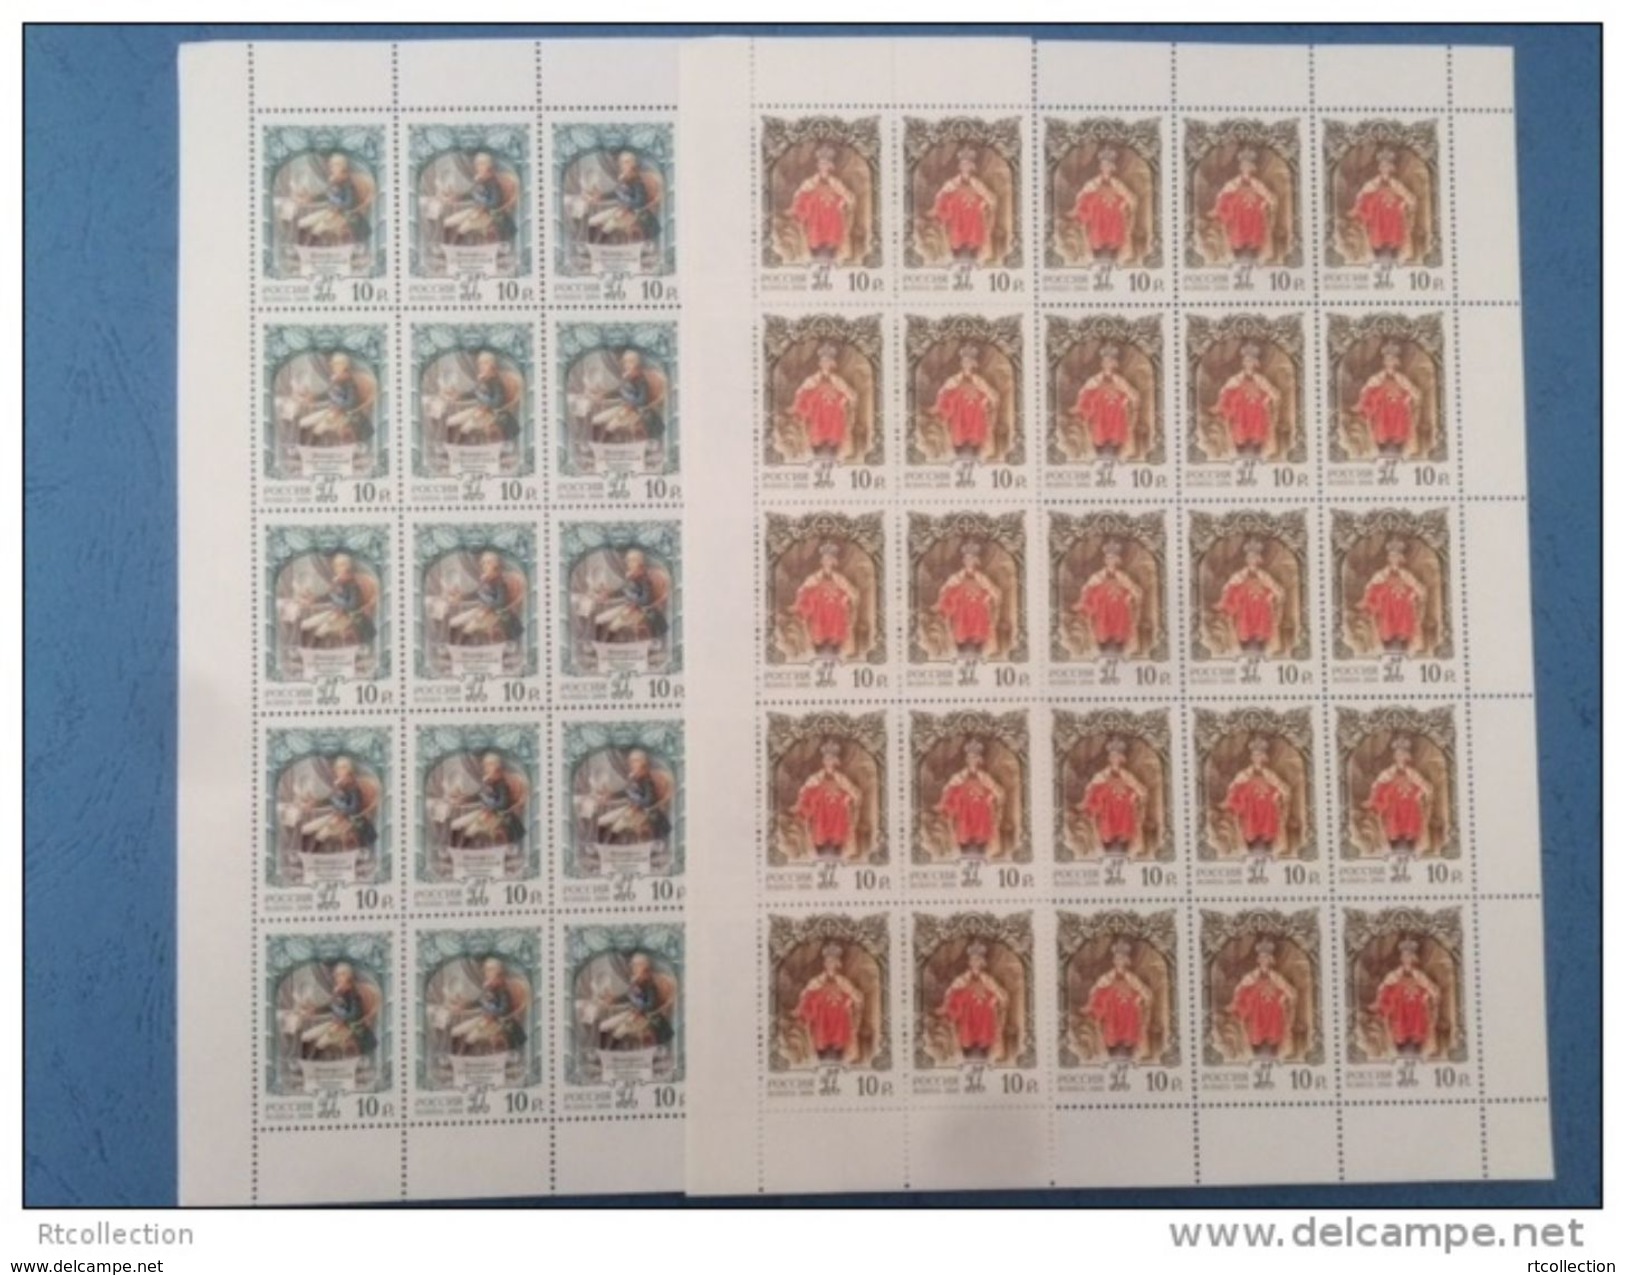 Russia 2004 Sheet 250Y Emperor Paul I Art Portrait Royals Royalty People Celebrations Stamps Mi 1206-07 SC 6862-63 - Full Sheets